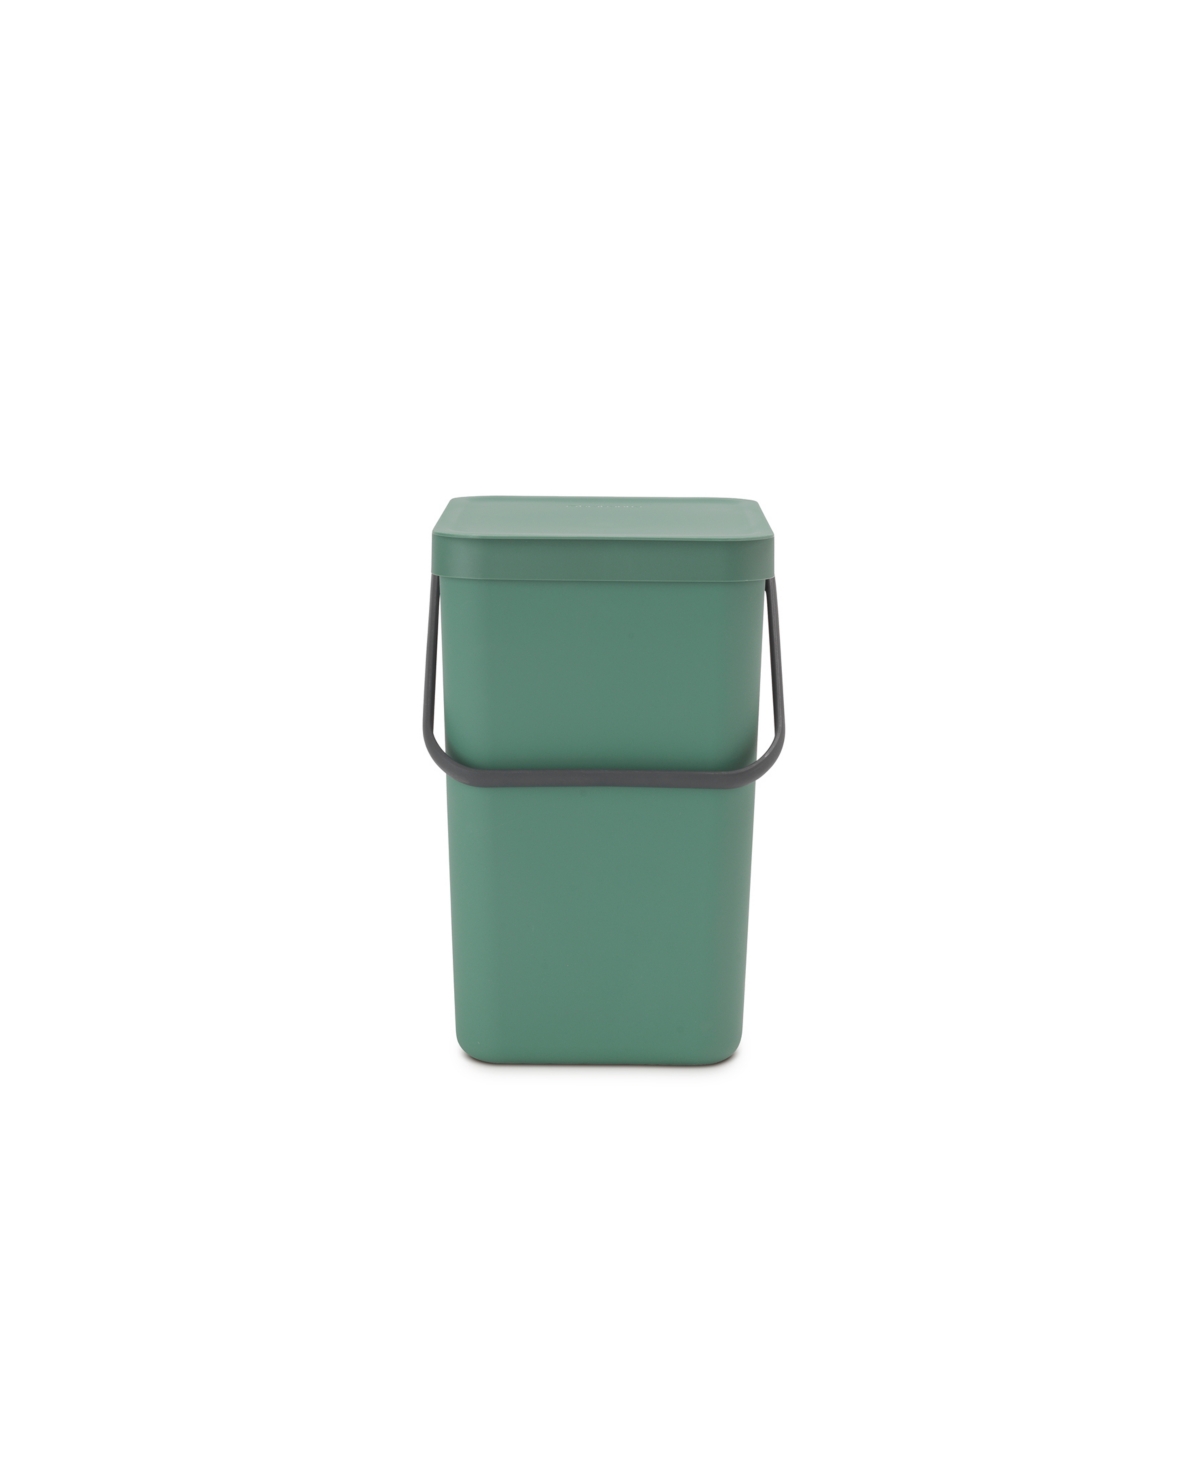 Brabantia Sort Go Plastic Waste Bin, 6.6 Gallon, 25 Liter In Fir Green